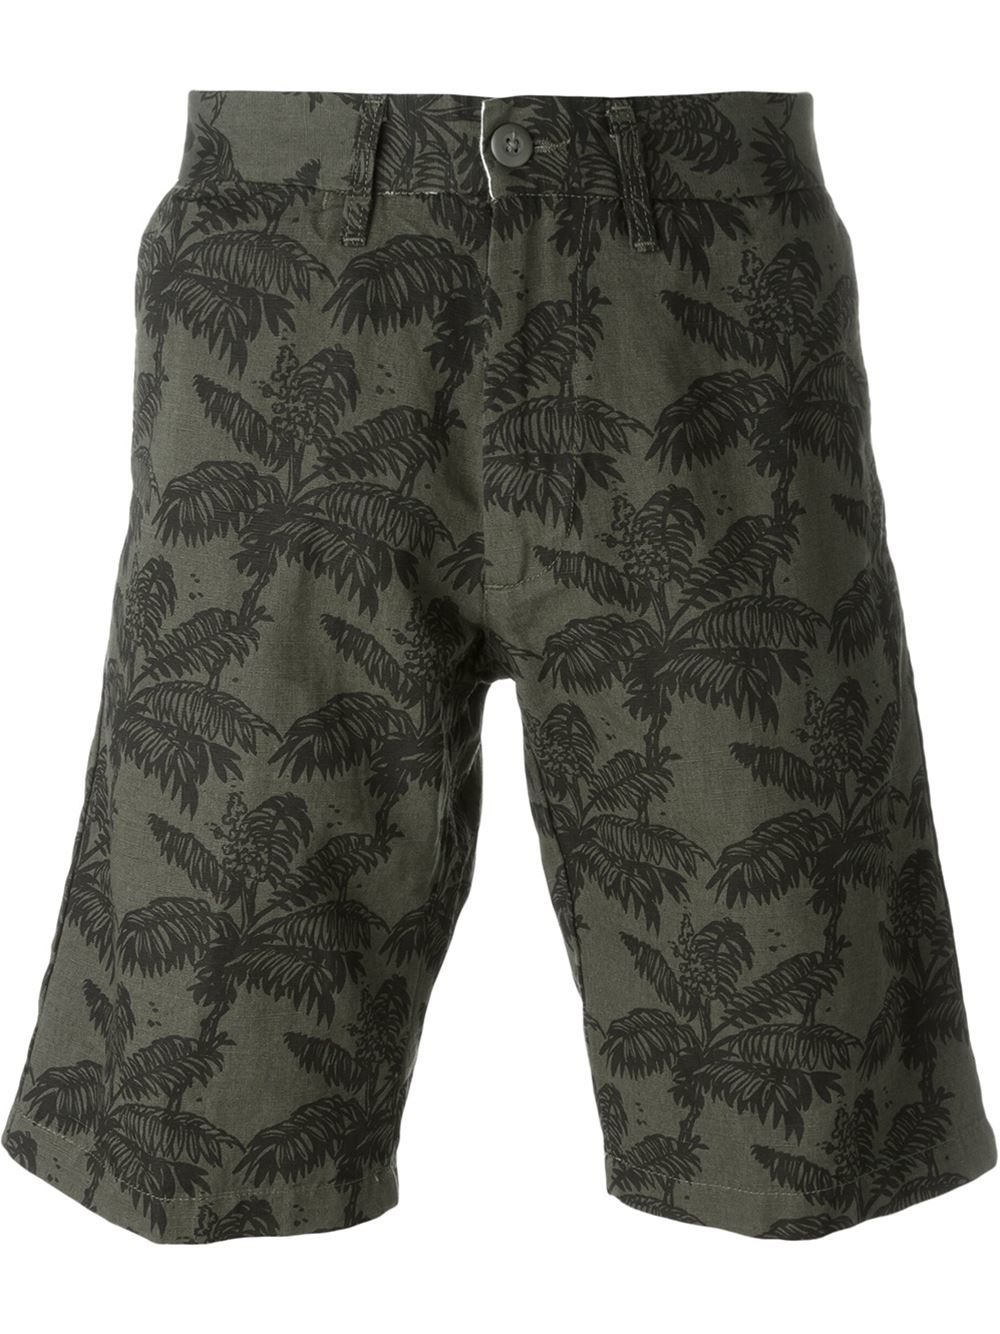 Lyst - Carhartt 'johnson' Palm Tree Print Bermuda Shorts in Green for Men